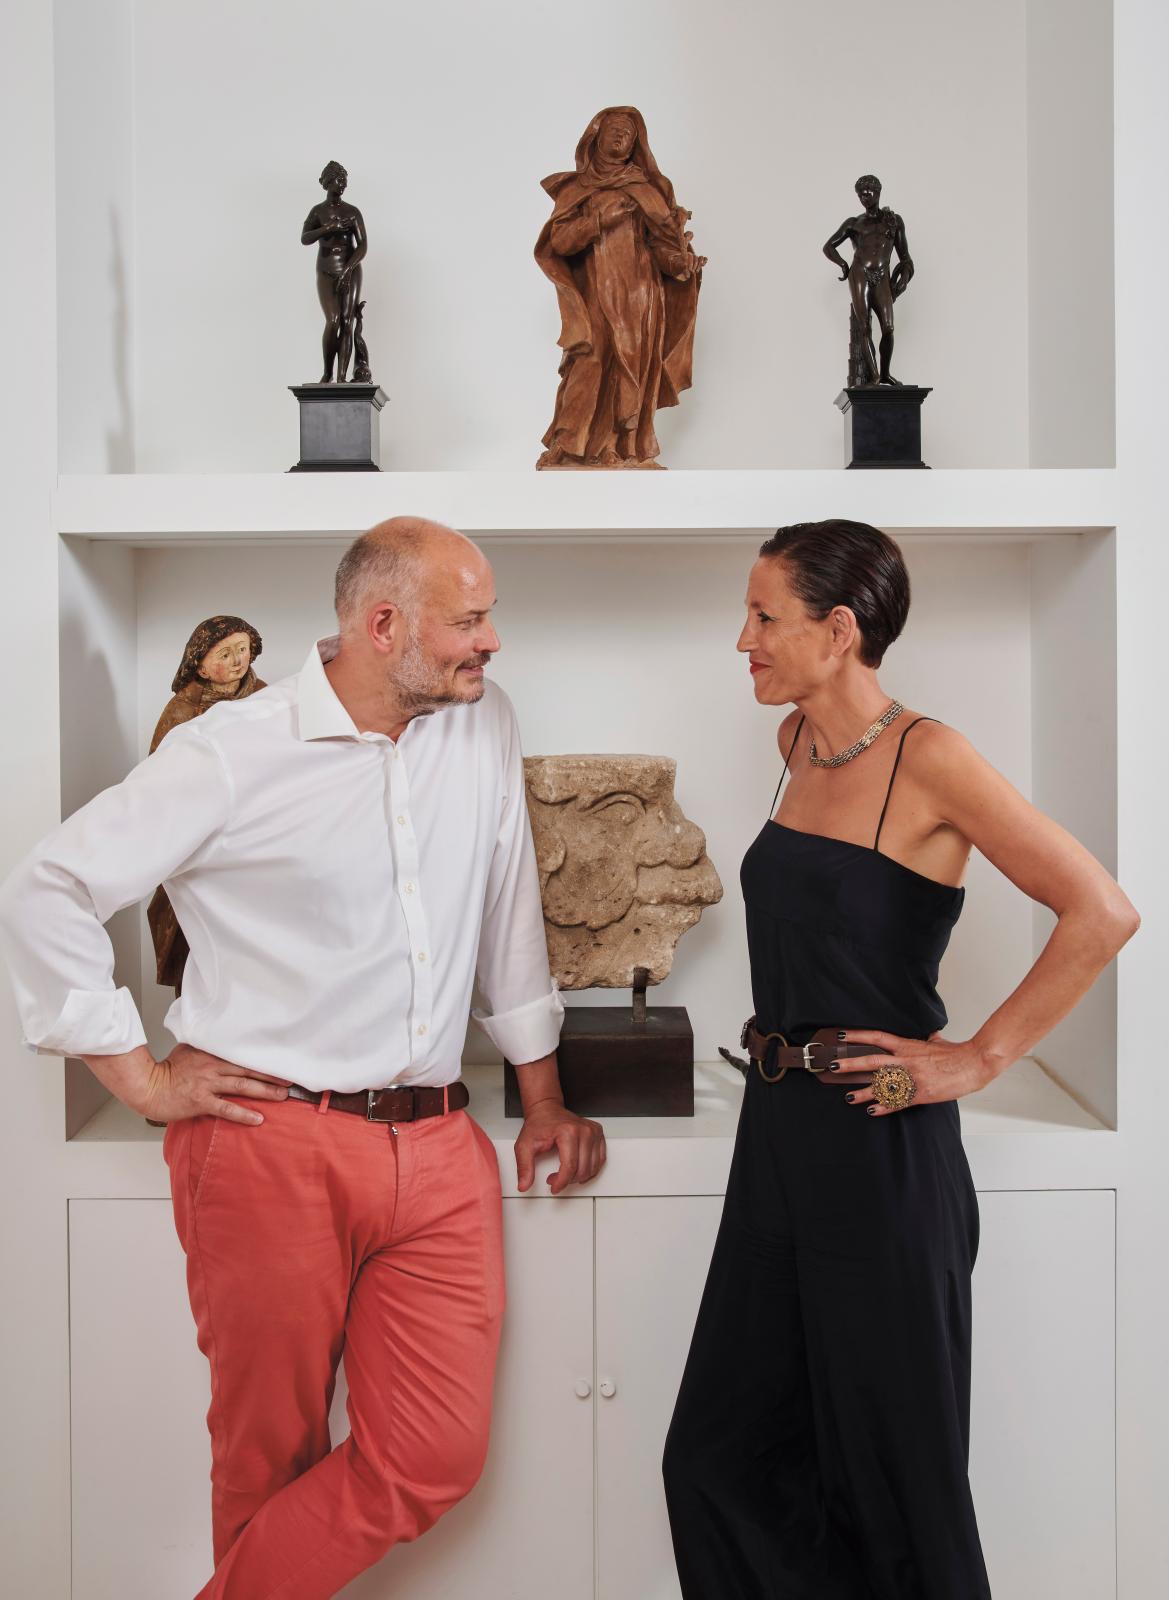 Gabriela and Mathieu Sismann: A Passion for Sculpture